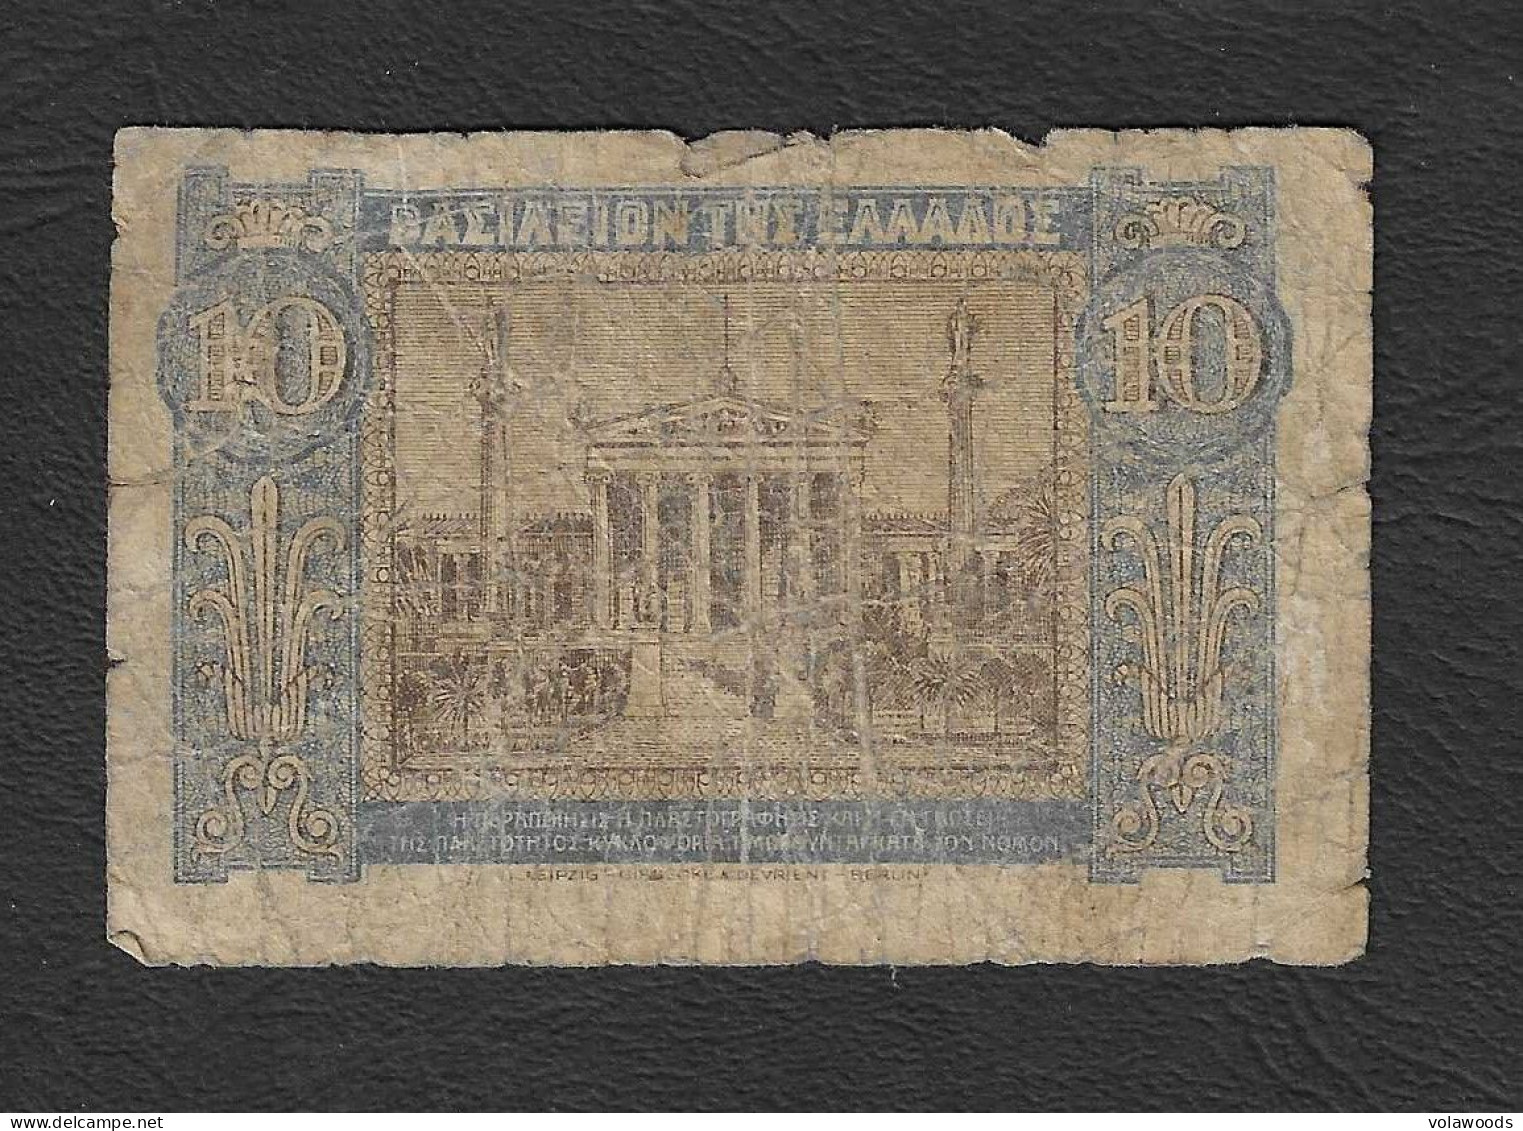 Grecia - Banconota Circolata Da 10 Dracme P-314 - 1940 #17 - Griechenland